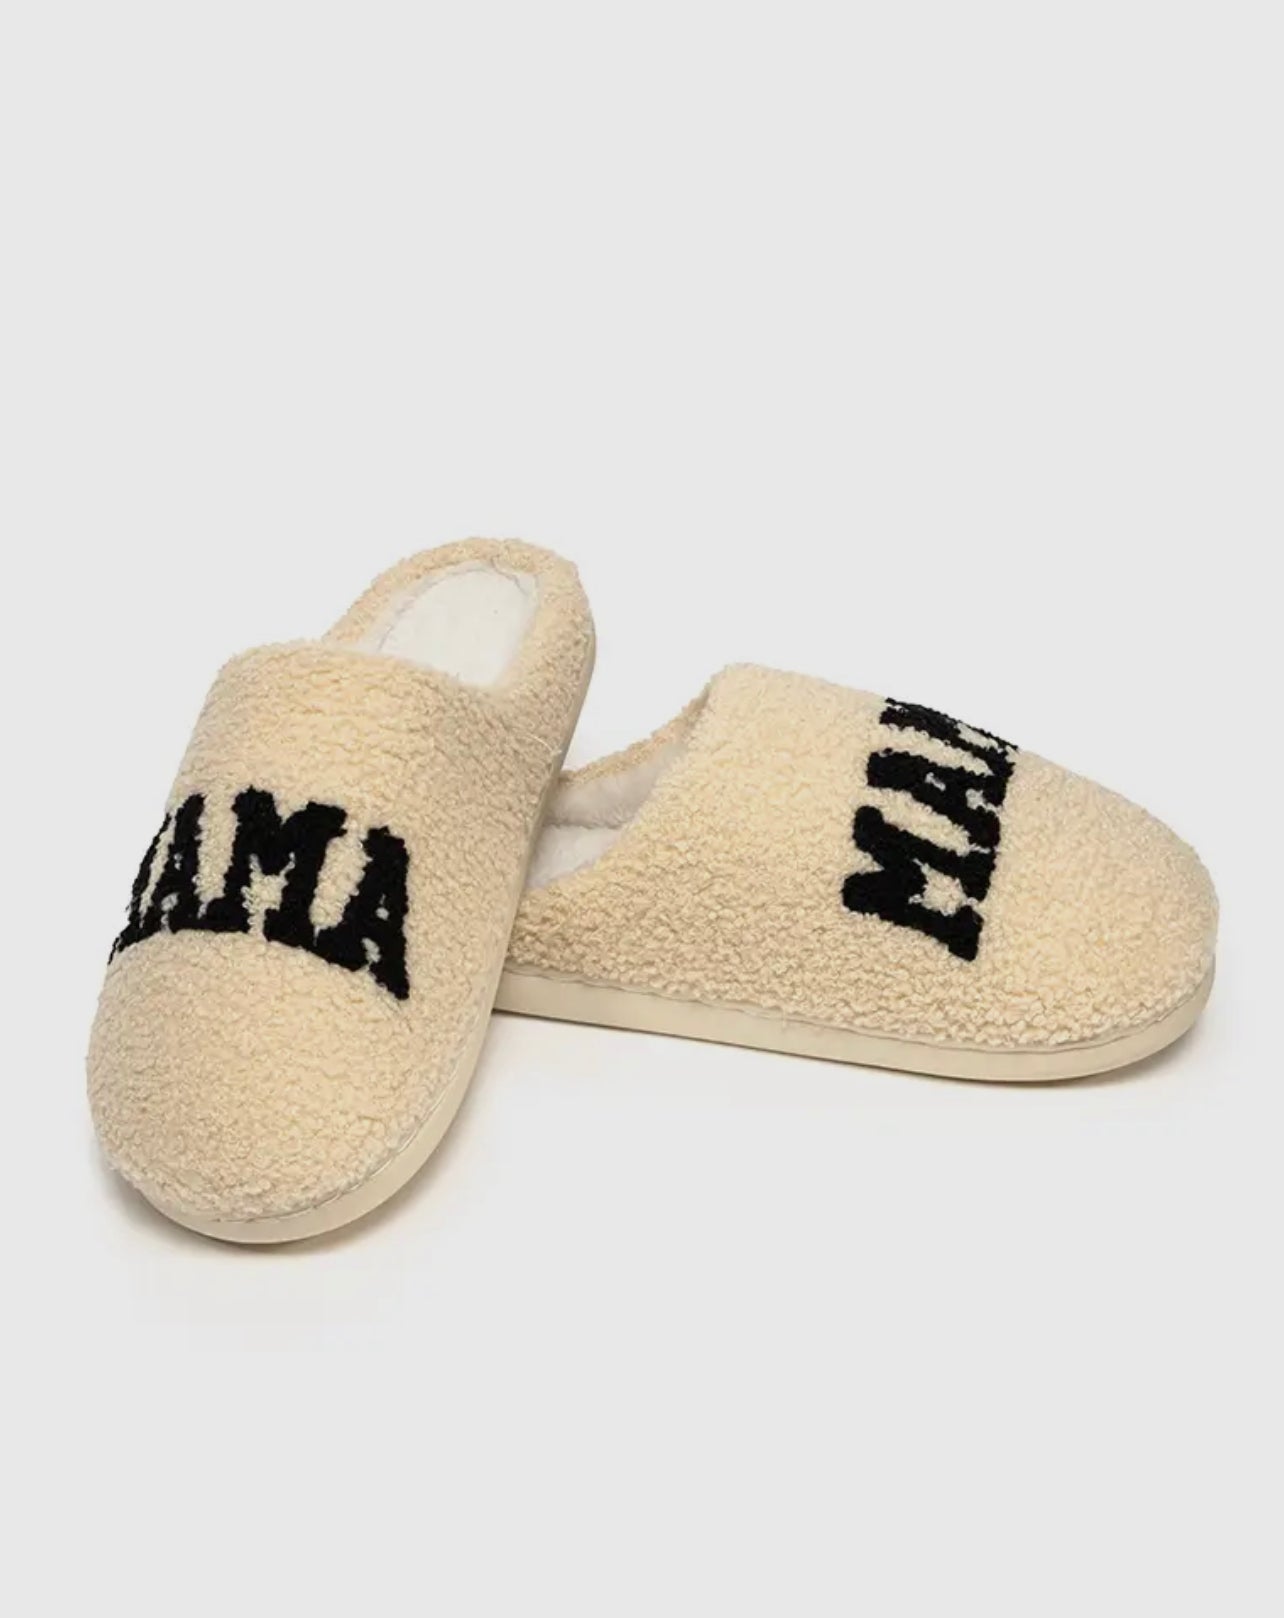 Mama slippers